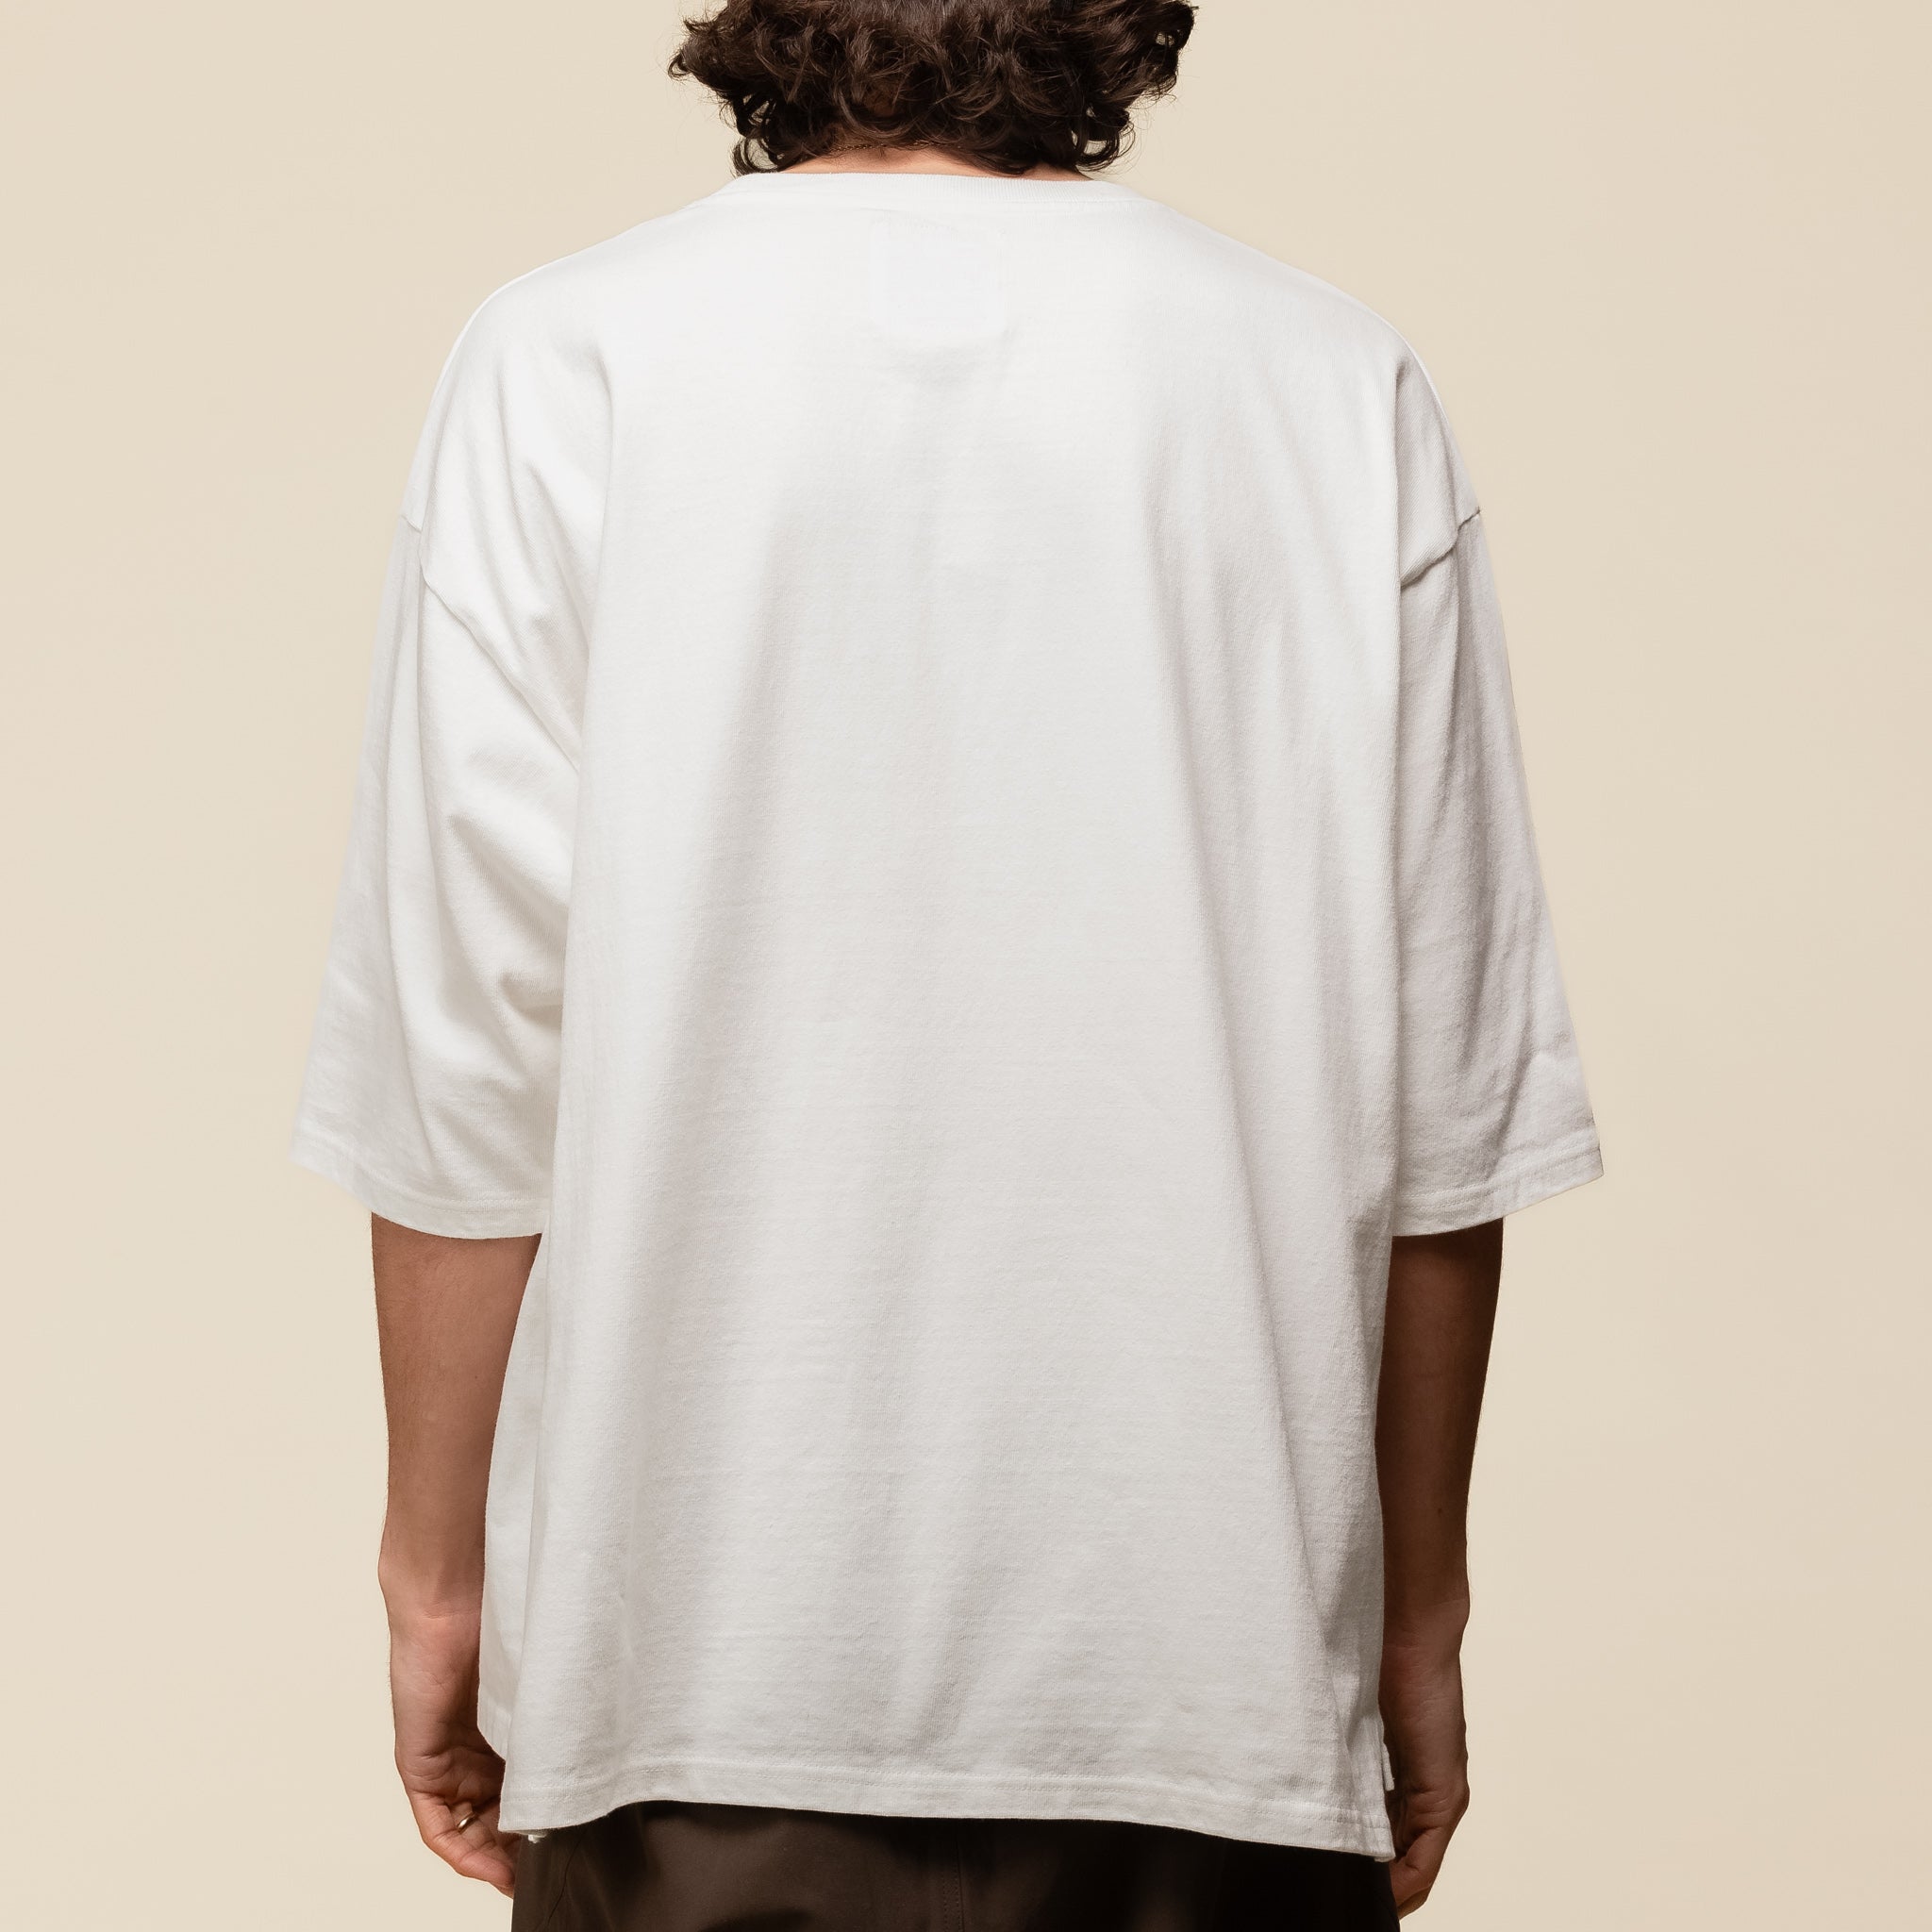 CMF Comfy Outdoor Garment - Heavy Cotton T-Shirt - White